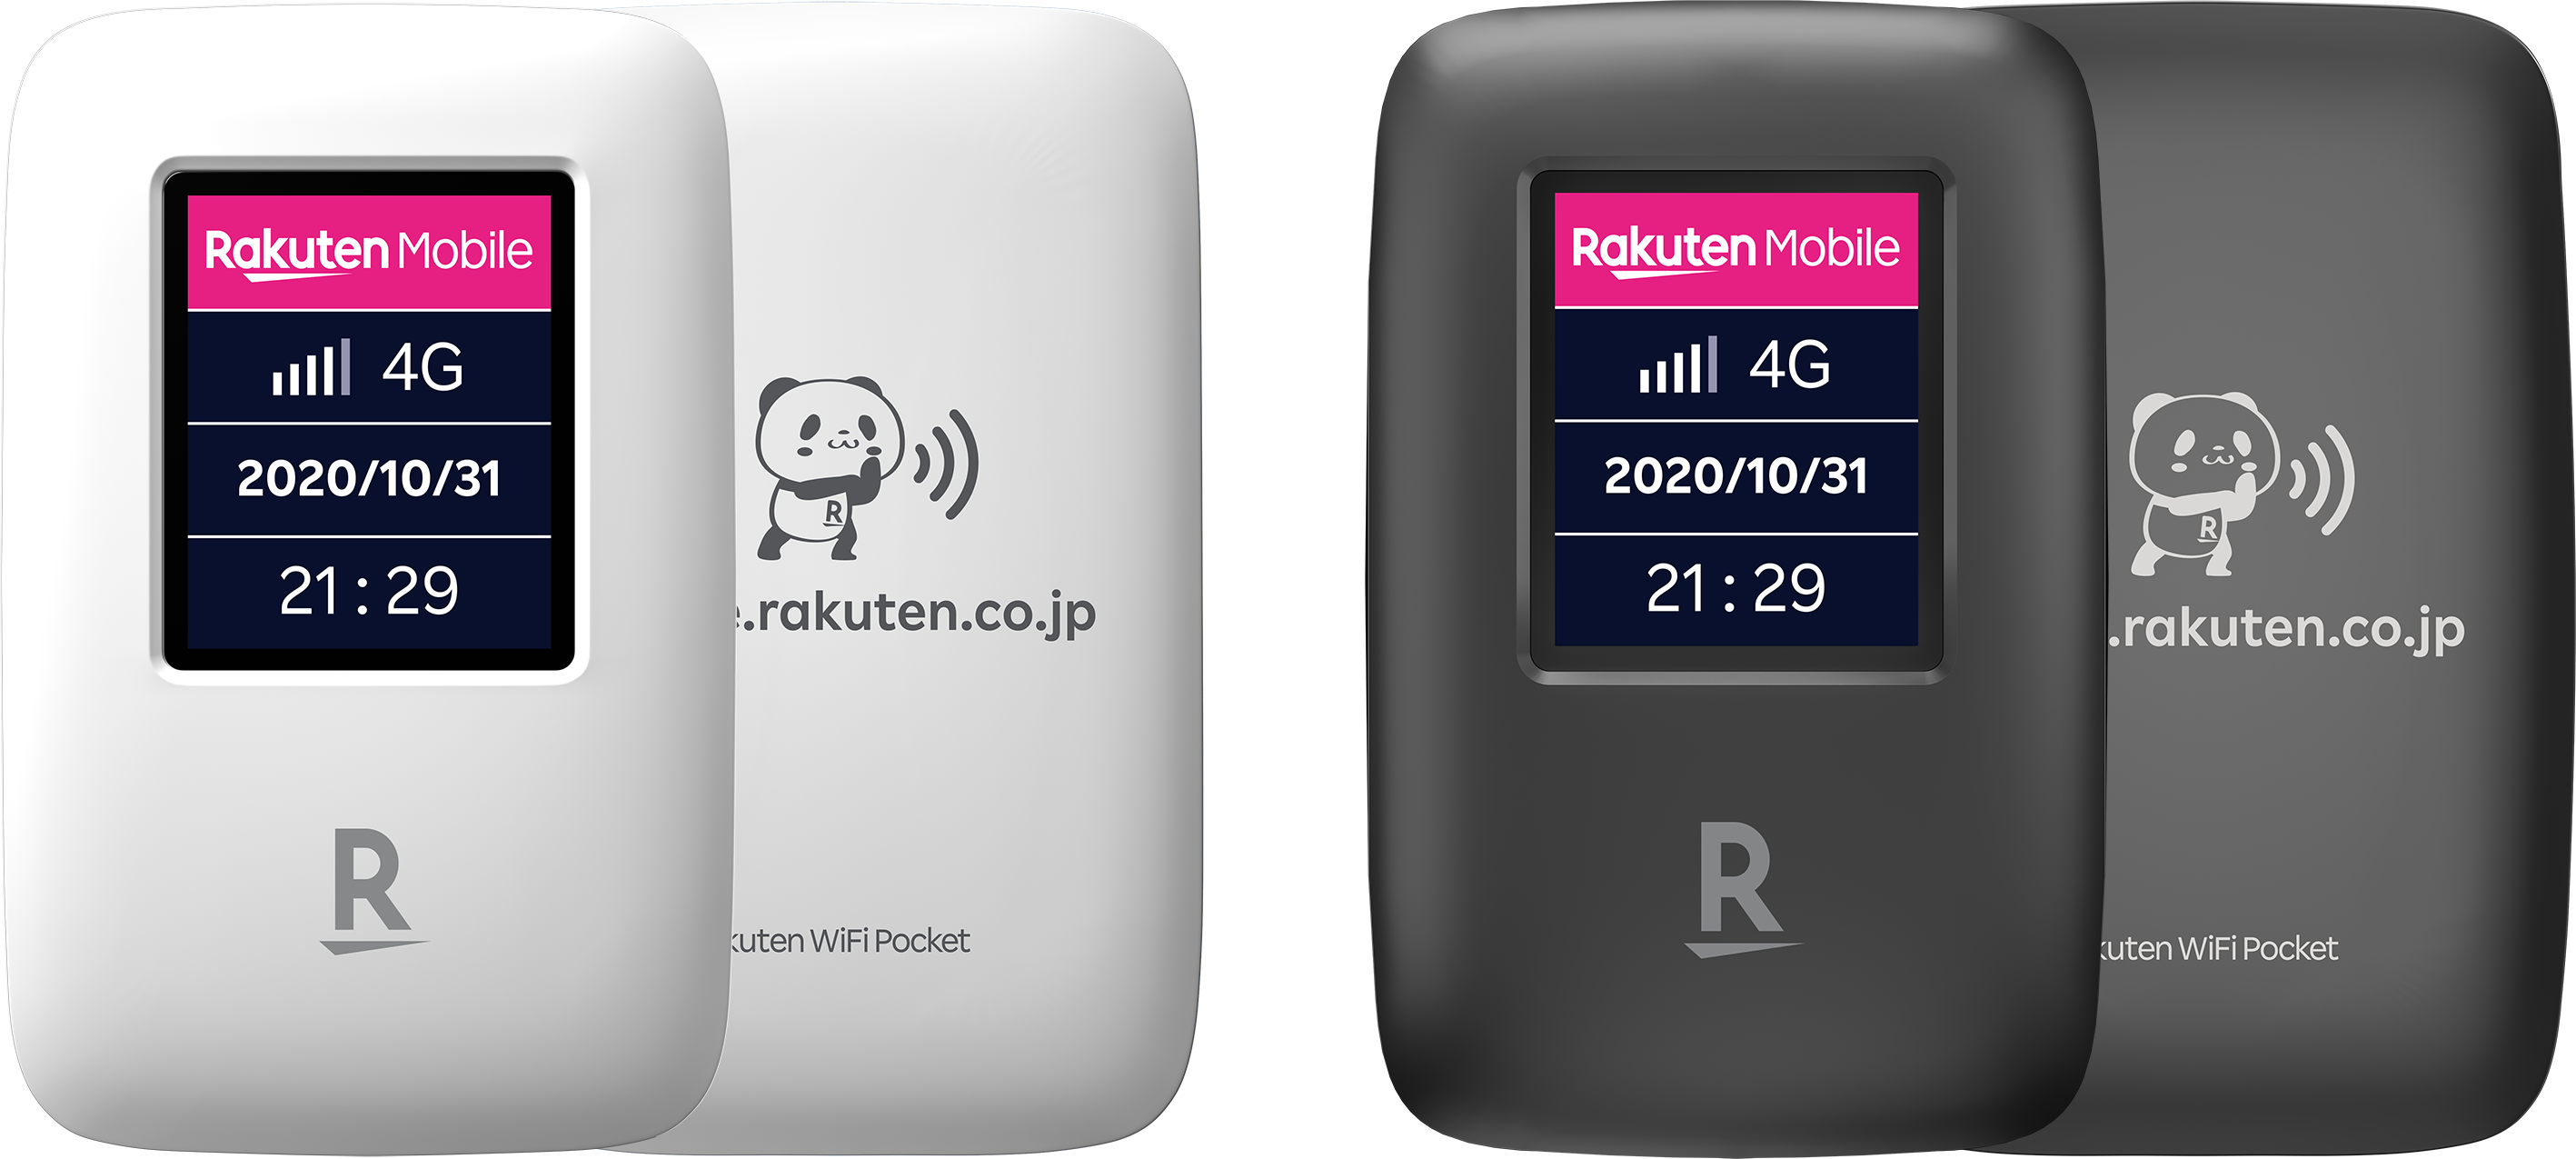 Rakuten Mobile Releases Original Wi-Fi Router, Rakuten WiFi Pocket